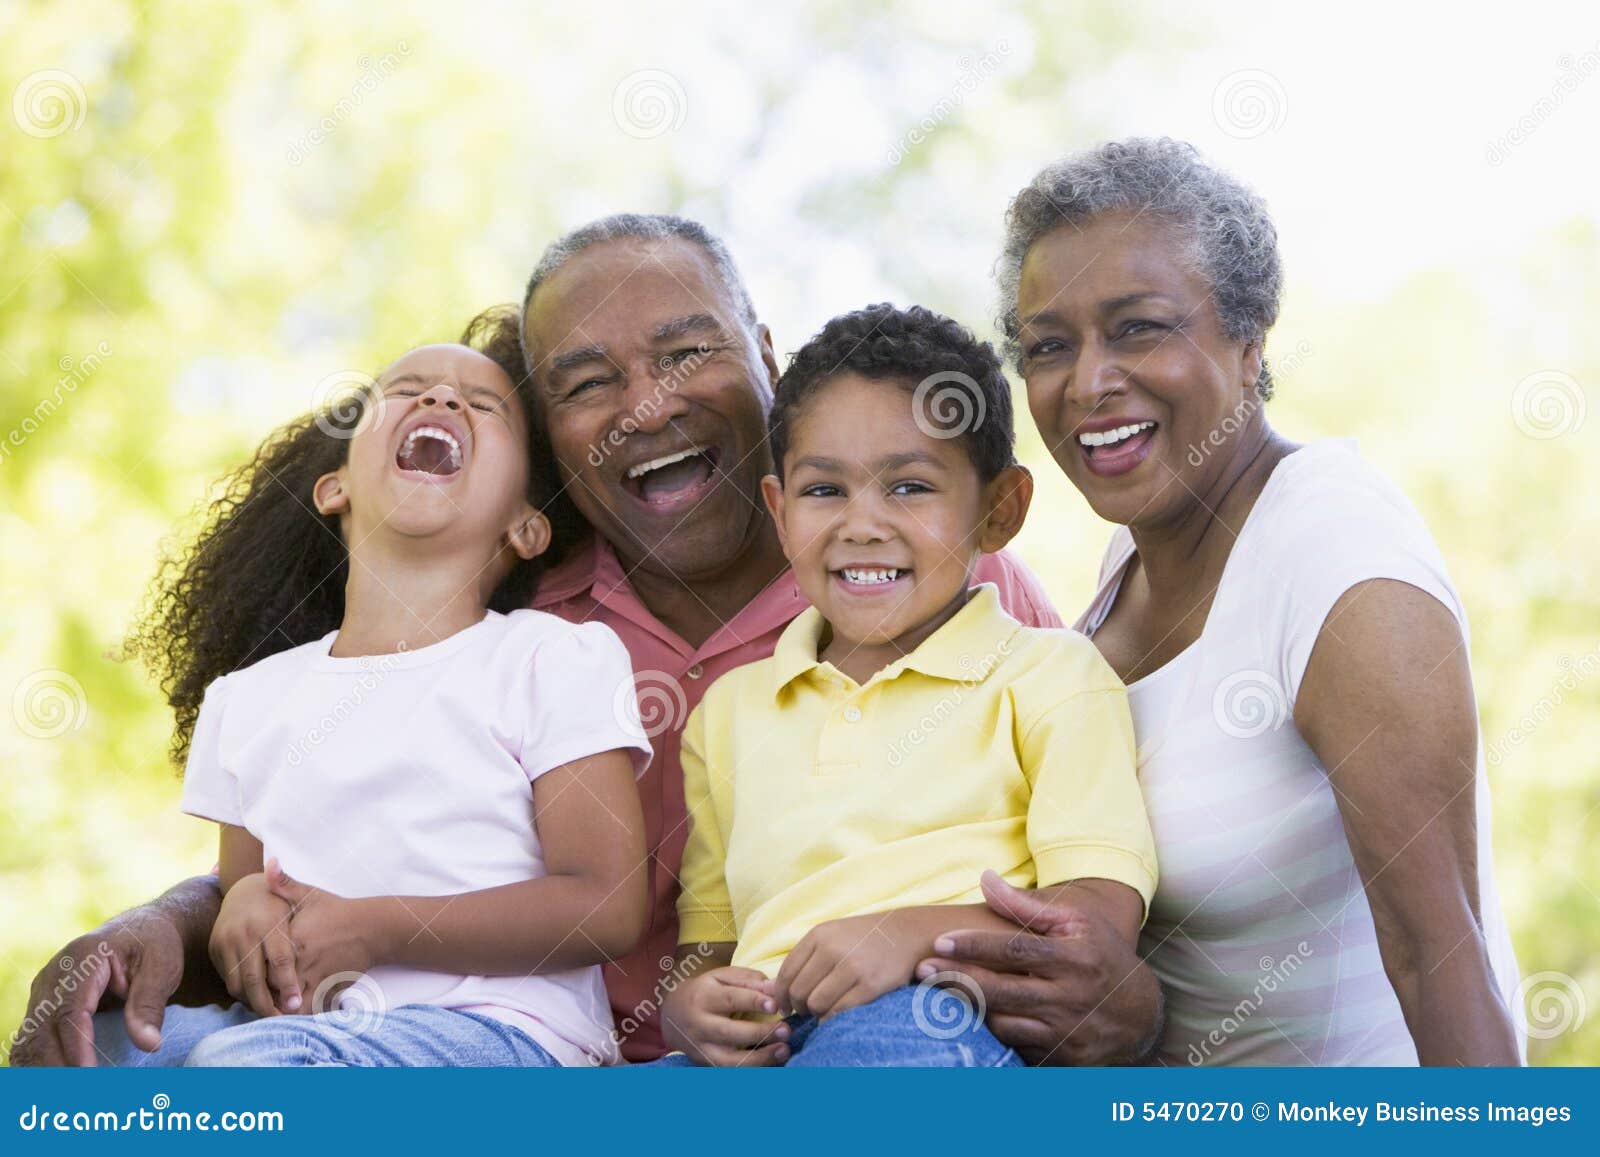 grandparents laughing with grandchildren